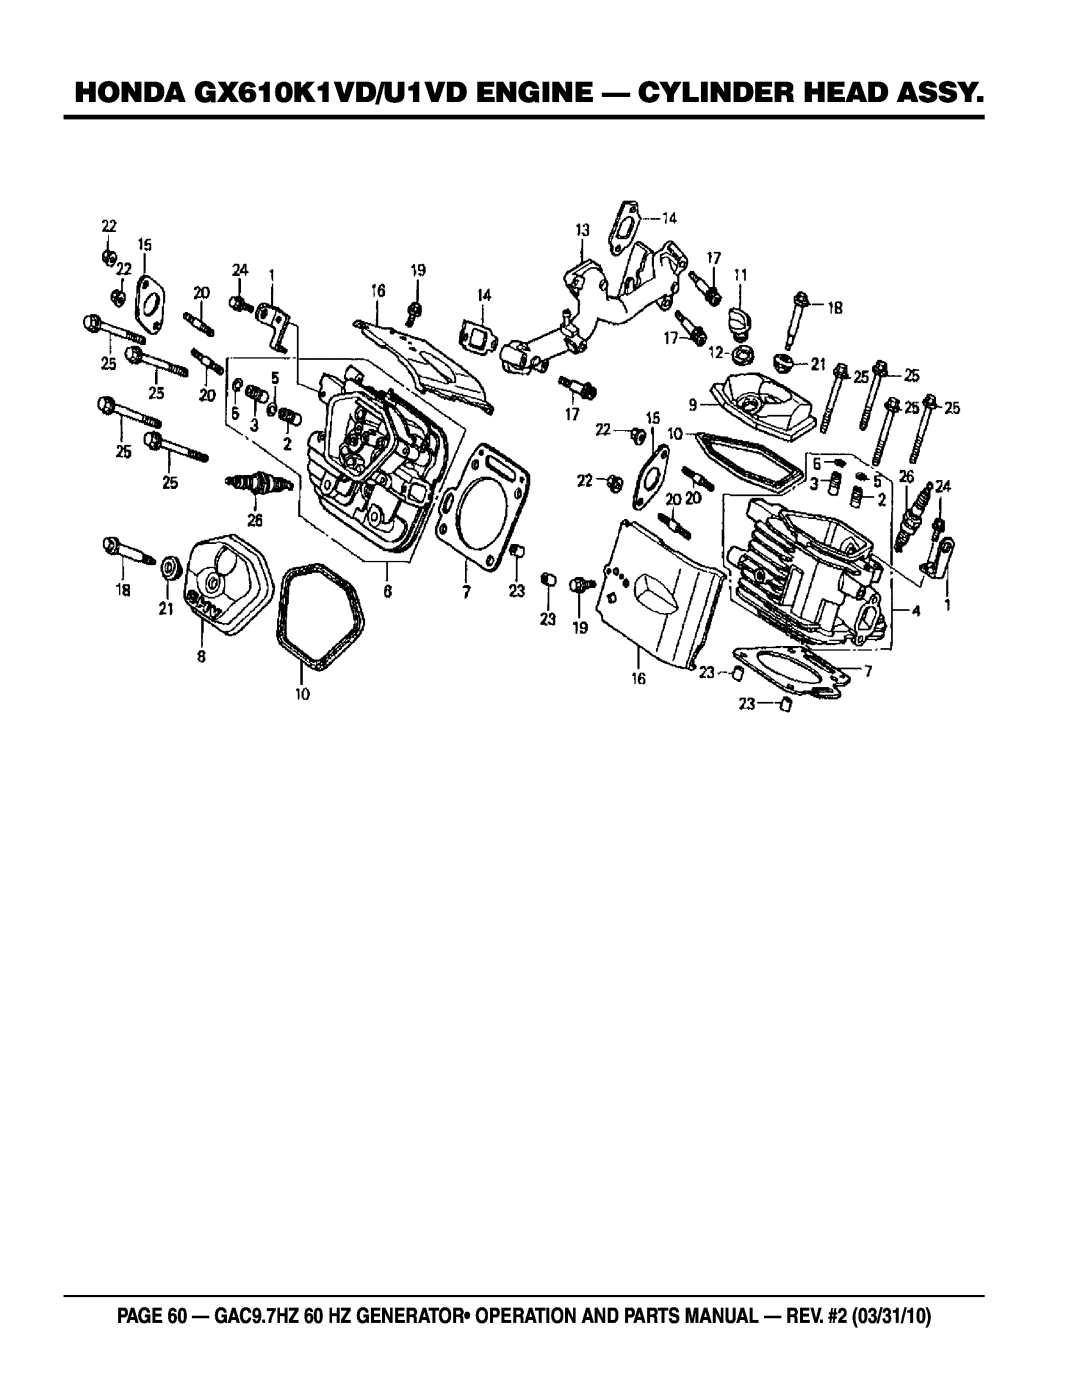 Multiquip GAC-9.7HZ manual HONDA GX610K1VD/U1VD ENGINE - CYLINDER HEAD ASSY 